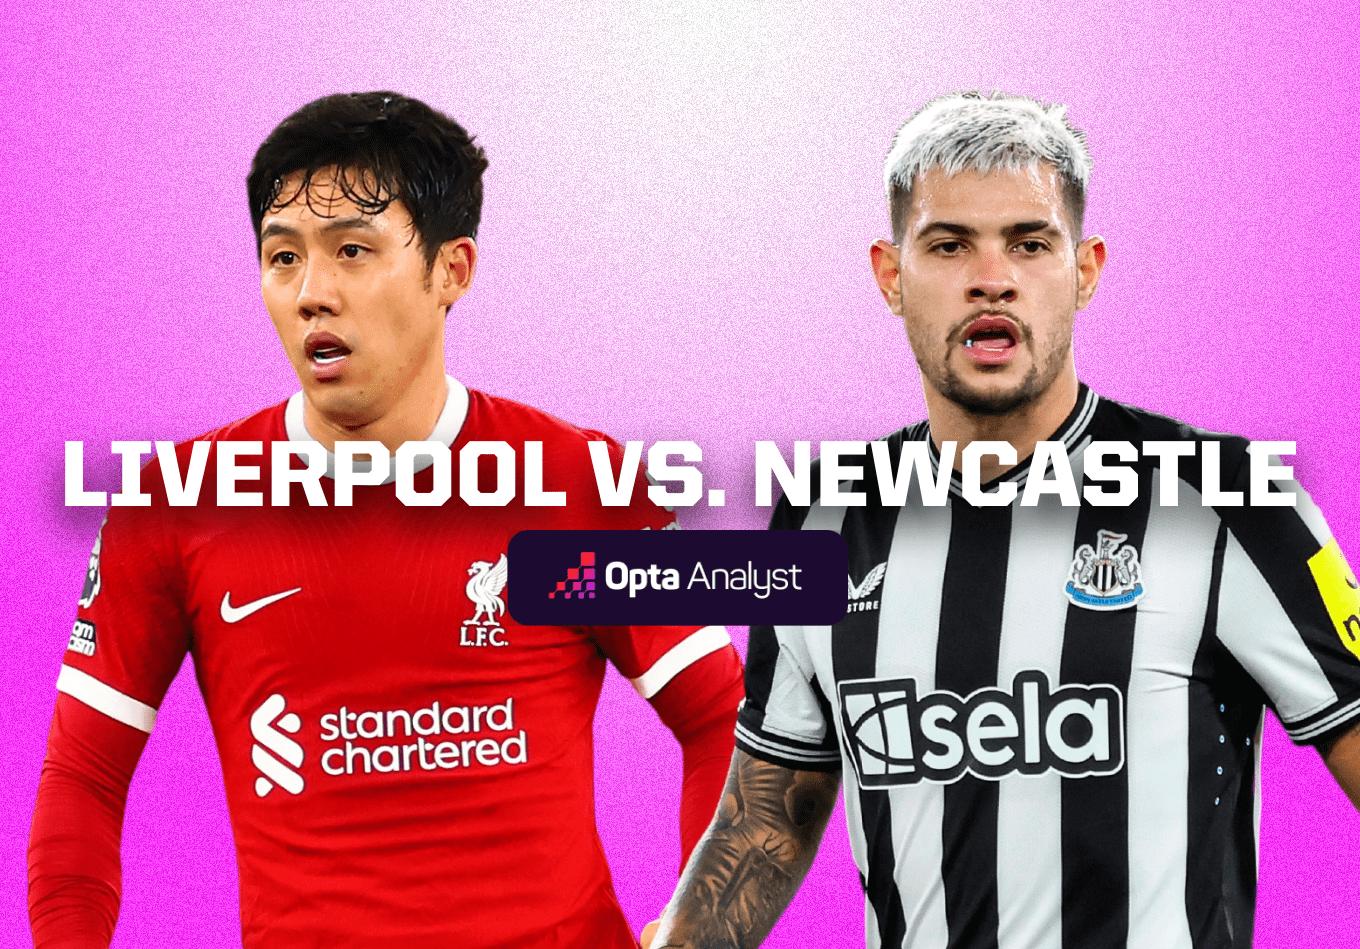 Liverpool vs Newcastle: Prediction and Preview